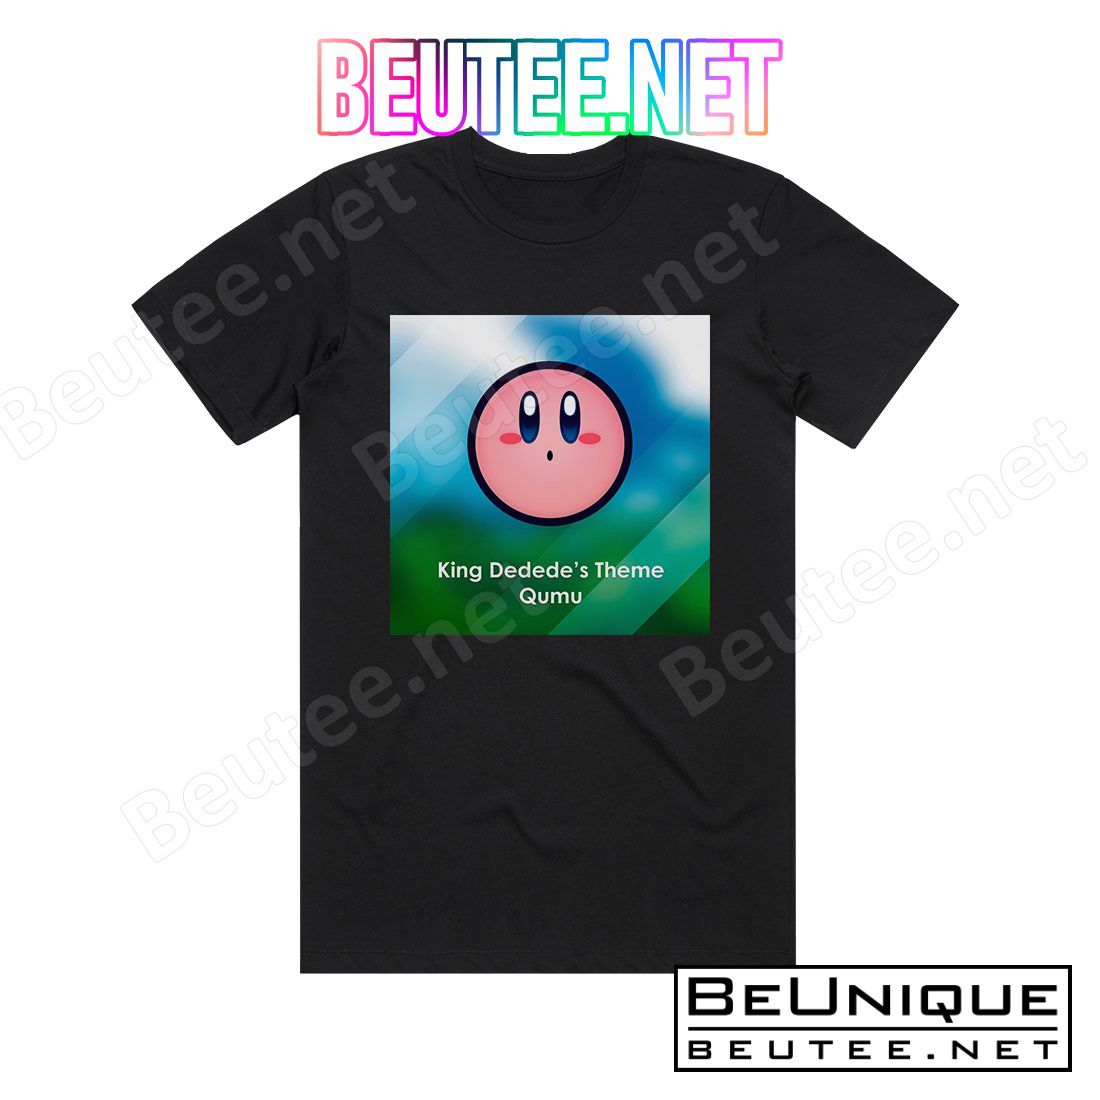 Qumu King Dedede's Theme From Kirby Super Star Album Cover T-Shirt